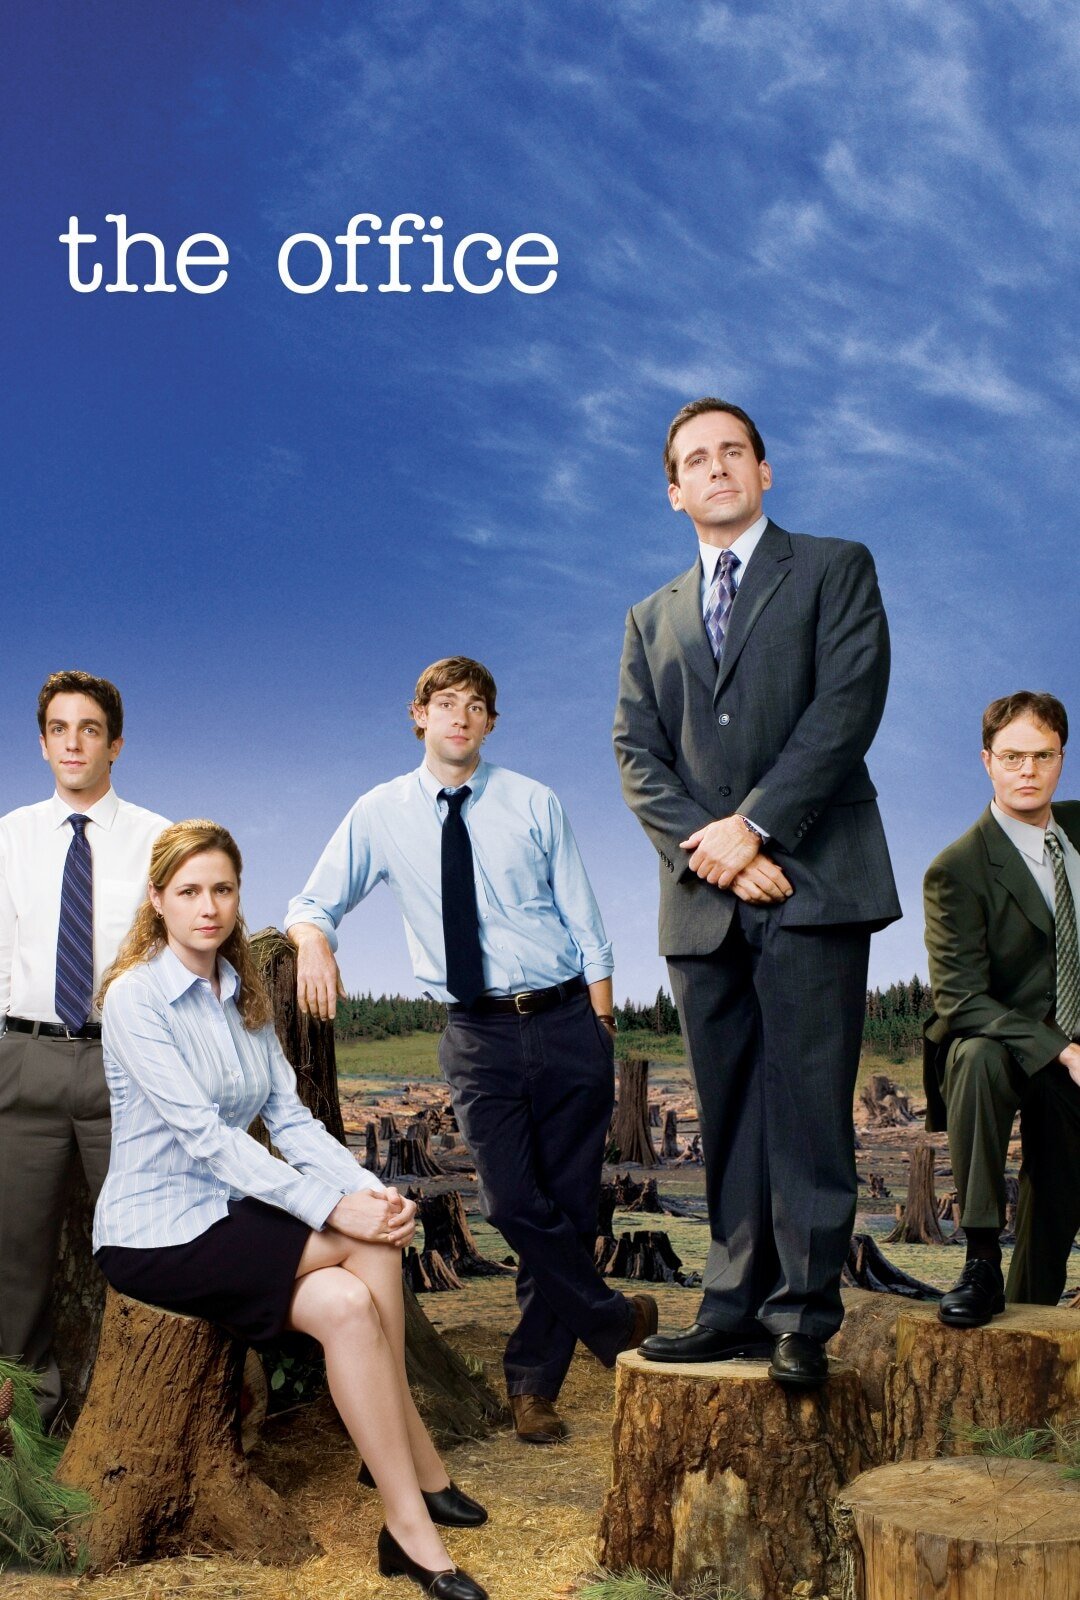 Watch The Office (US) Season 1 Episode 1 Online - Stream Full Episodes